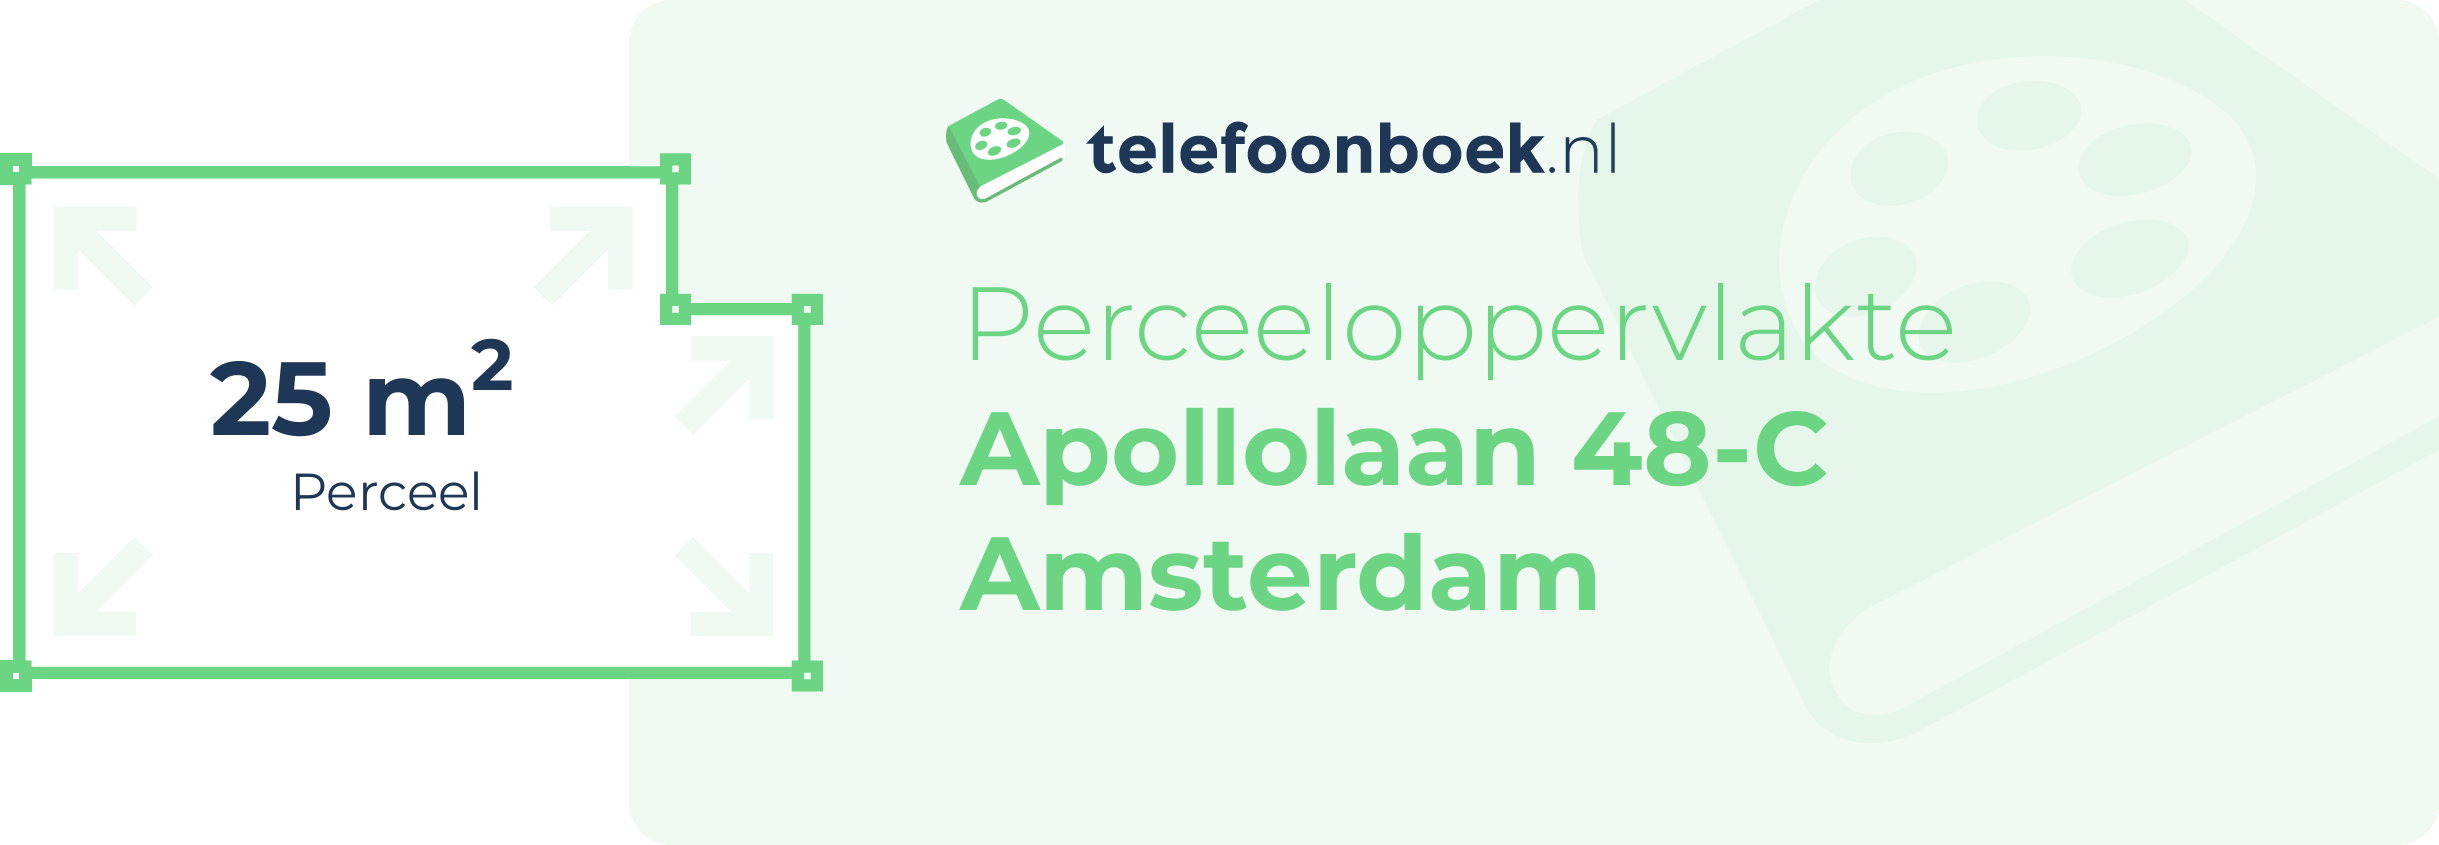 Perceeloppervlakte Apollolaan 48-C Amsterdam